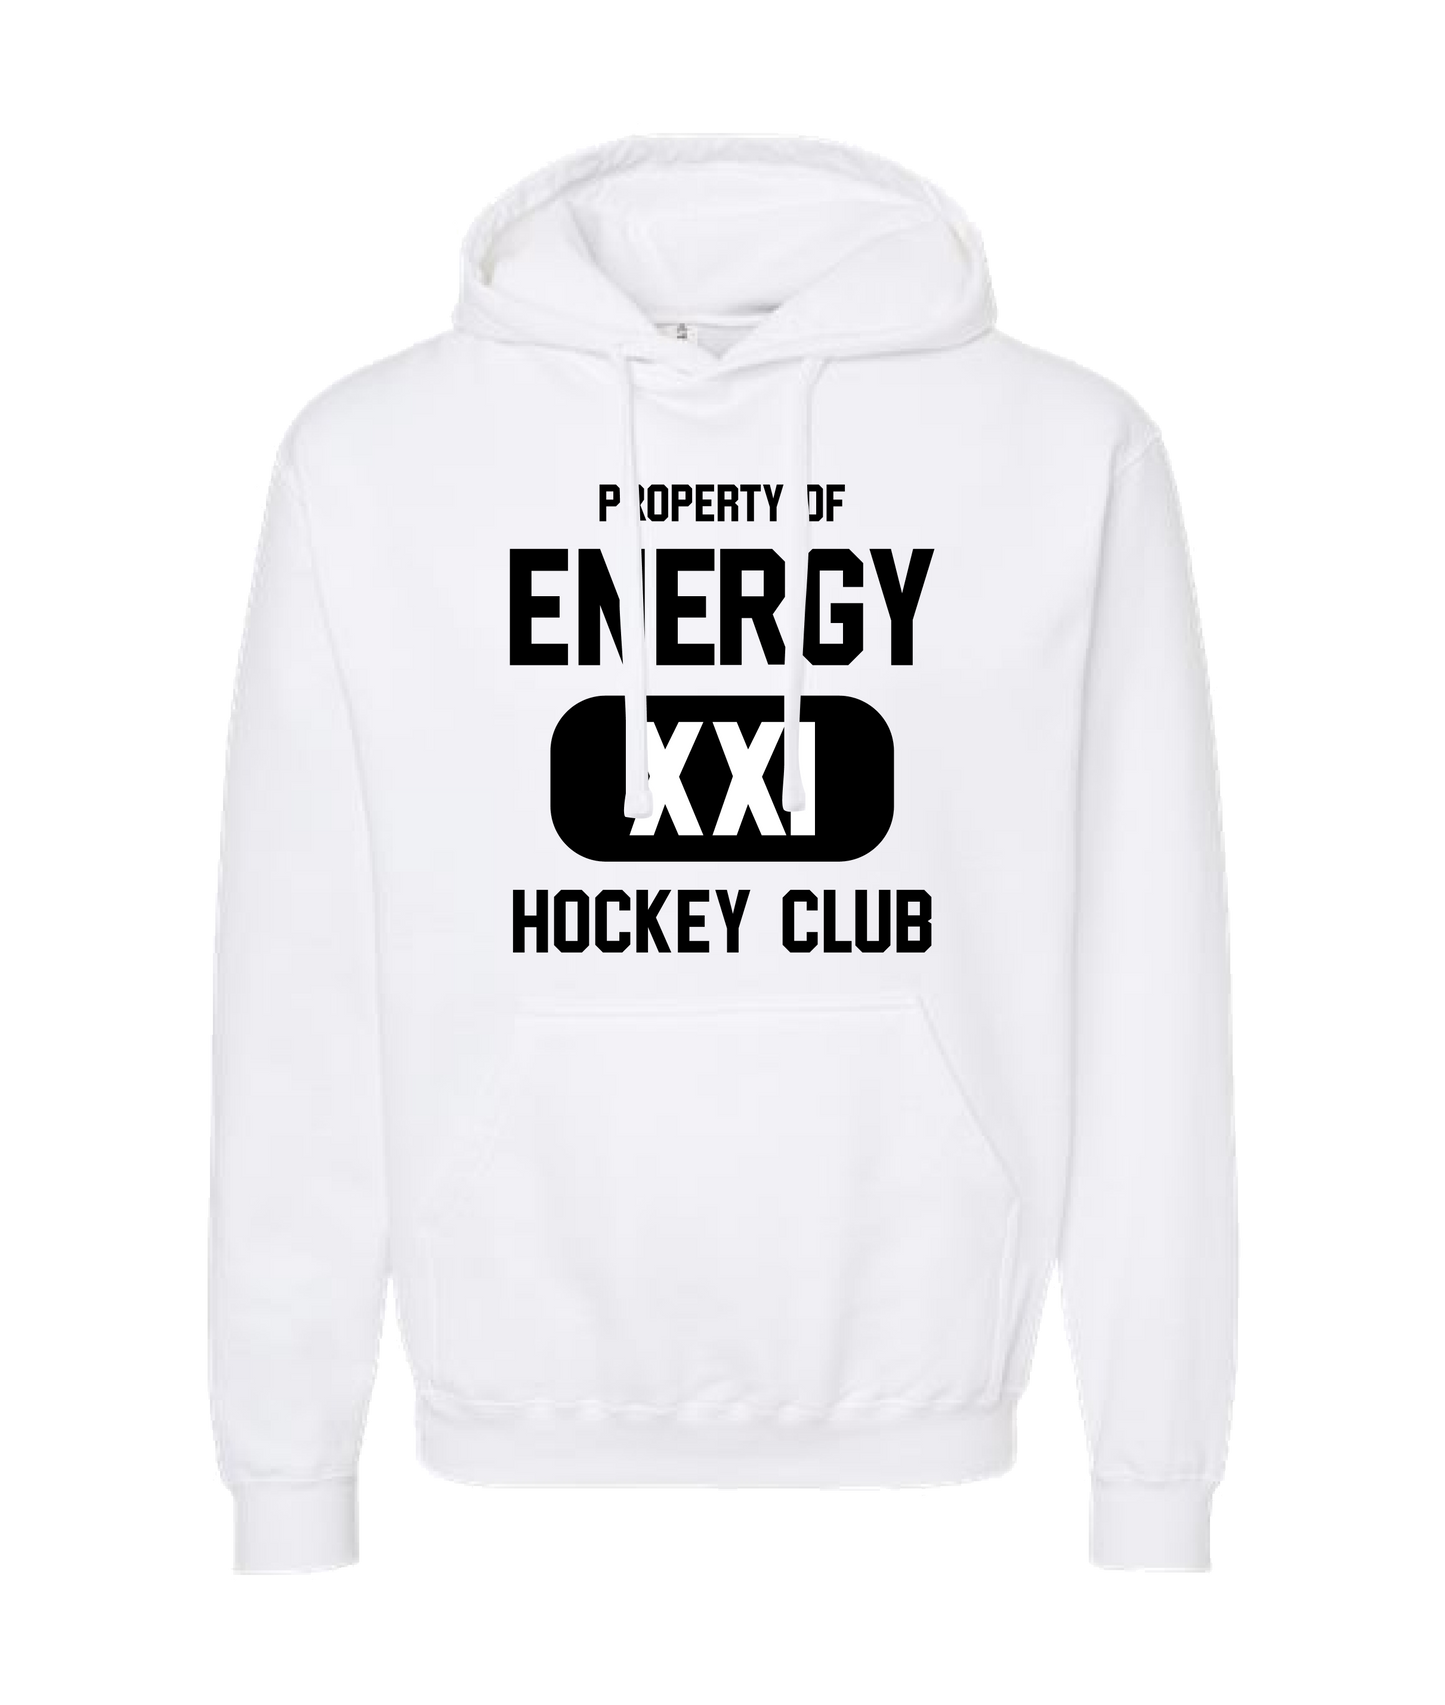 Energy Hockey - Energy XXI Hockey Club - White Hoodie